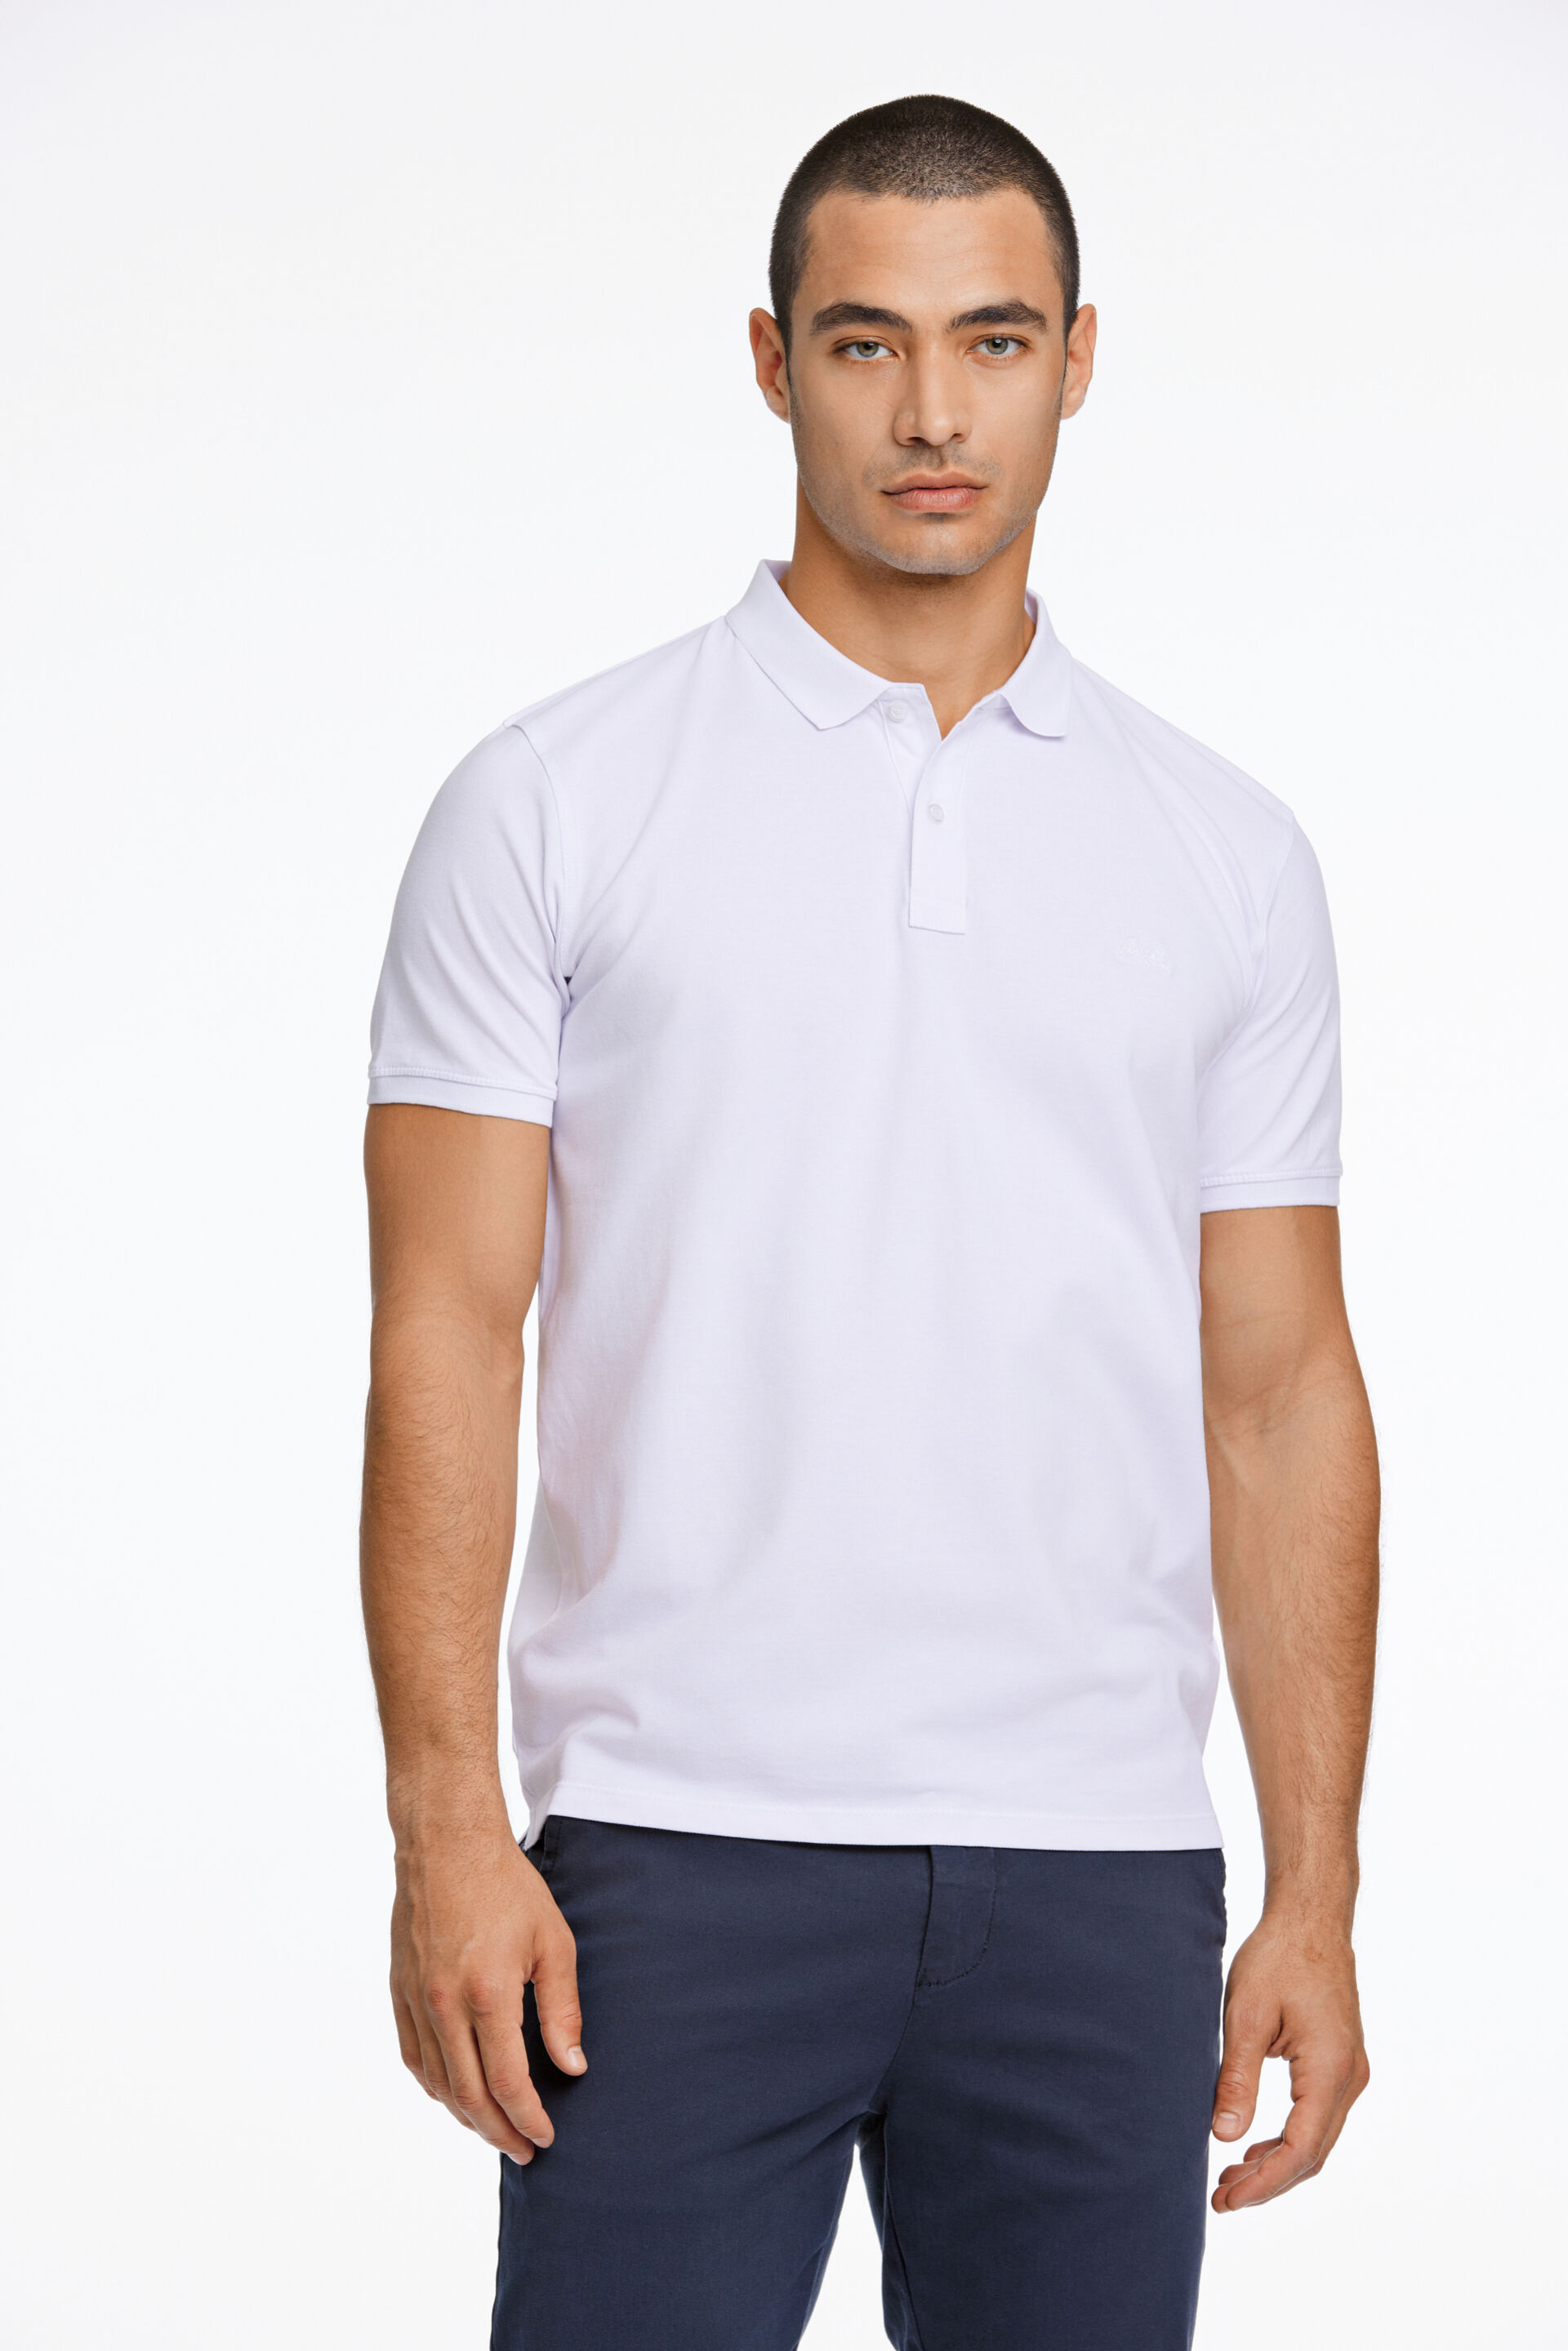 Polo shirt Polo shirt White 30-404016